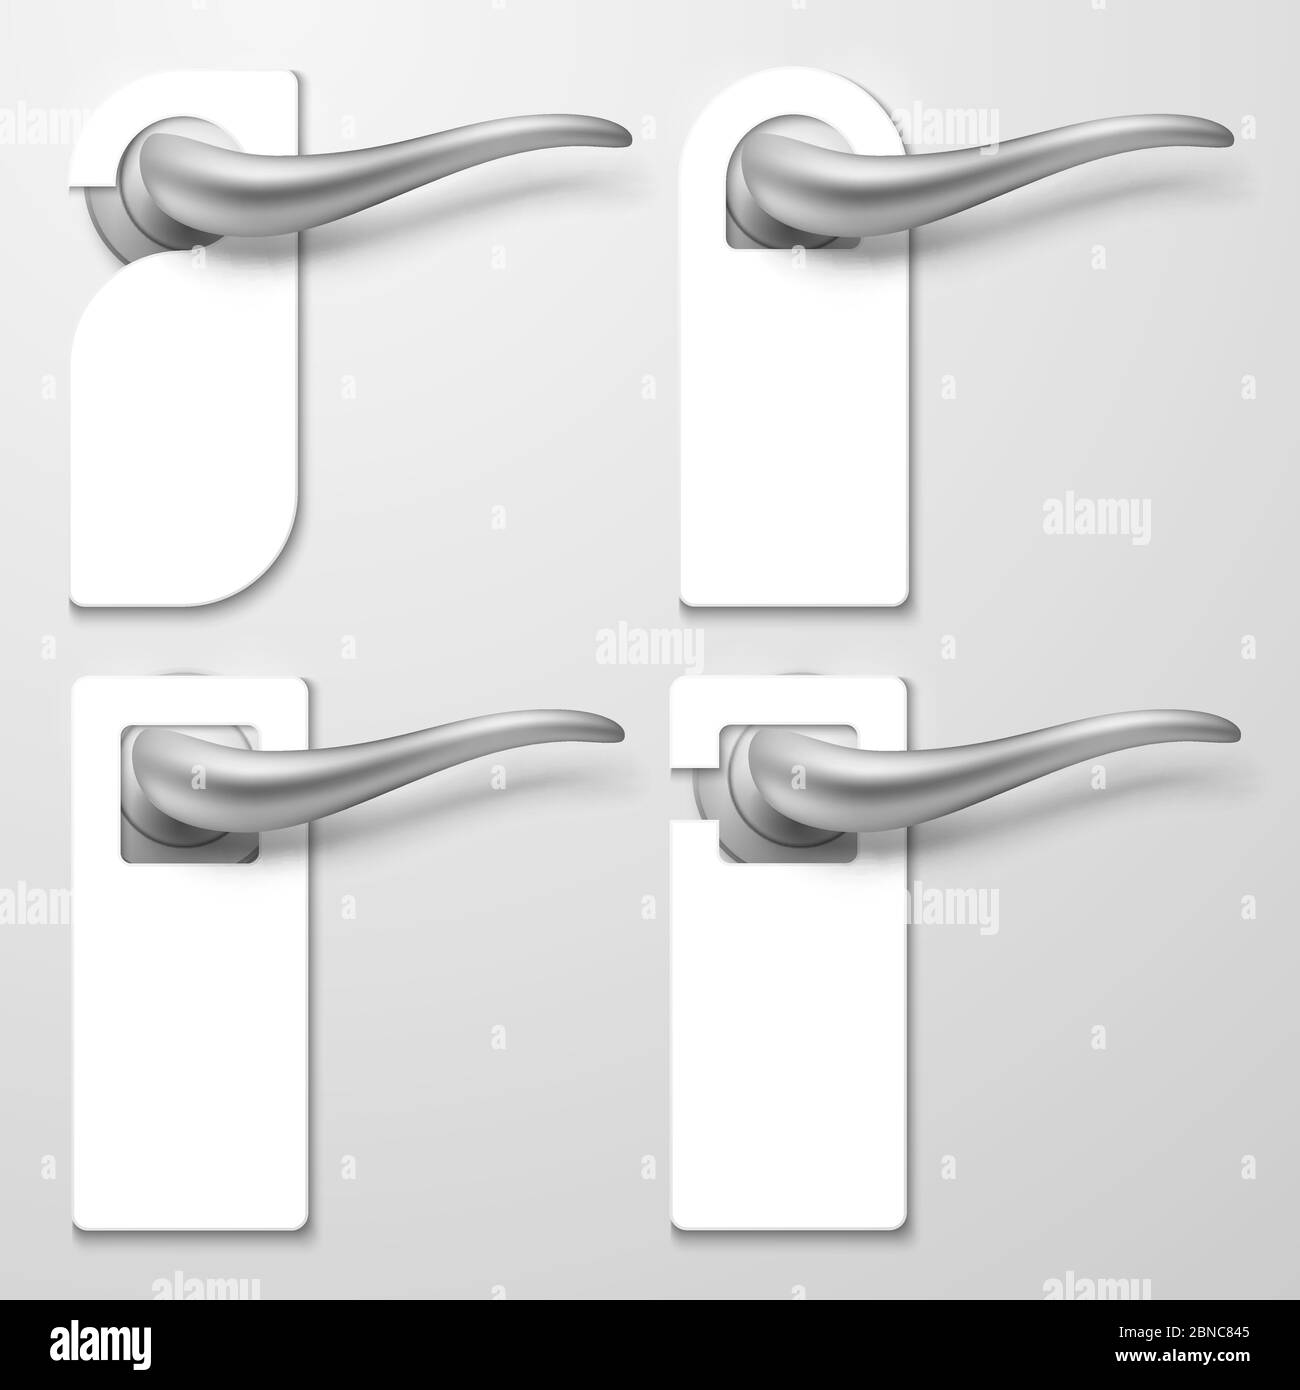 Realistic hotel door handles with white blank plastic hangers vector illustration. Handle door hotel room, warning tag for text Stock Vector